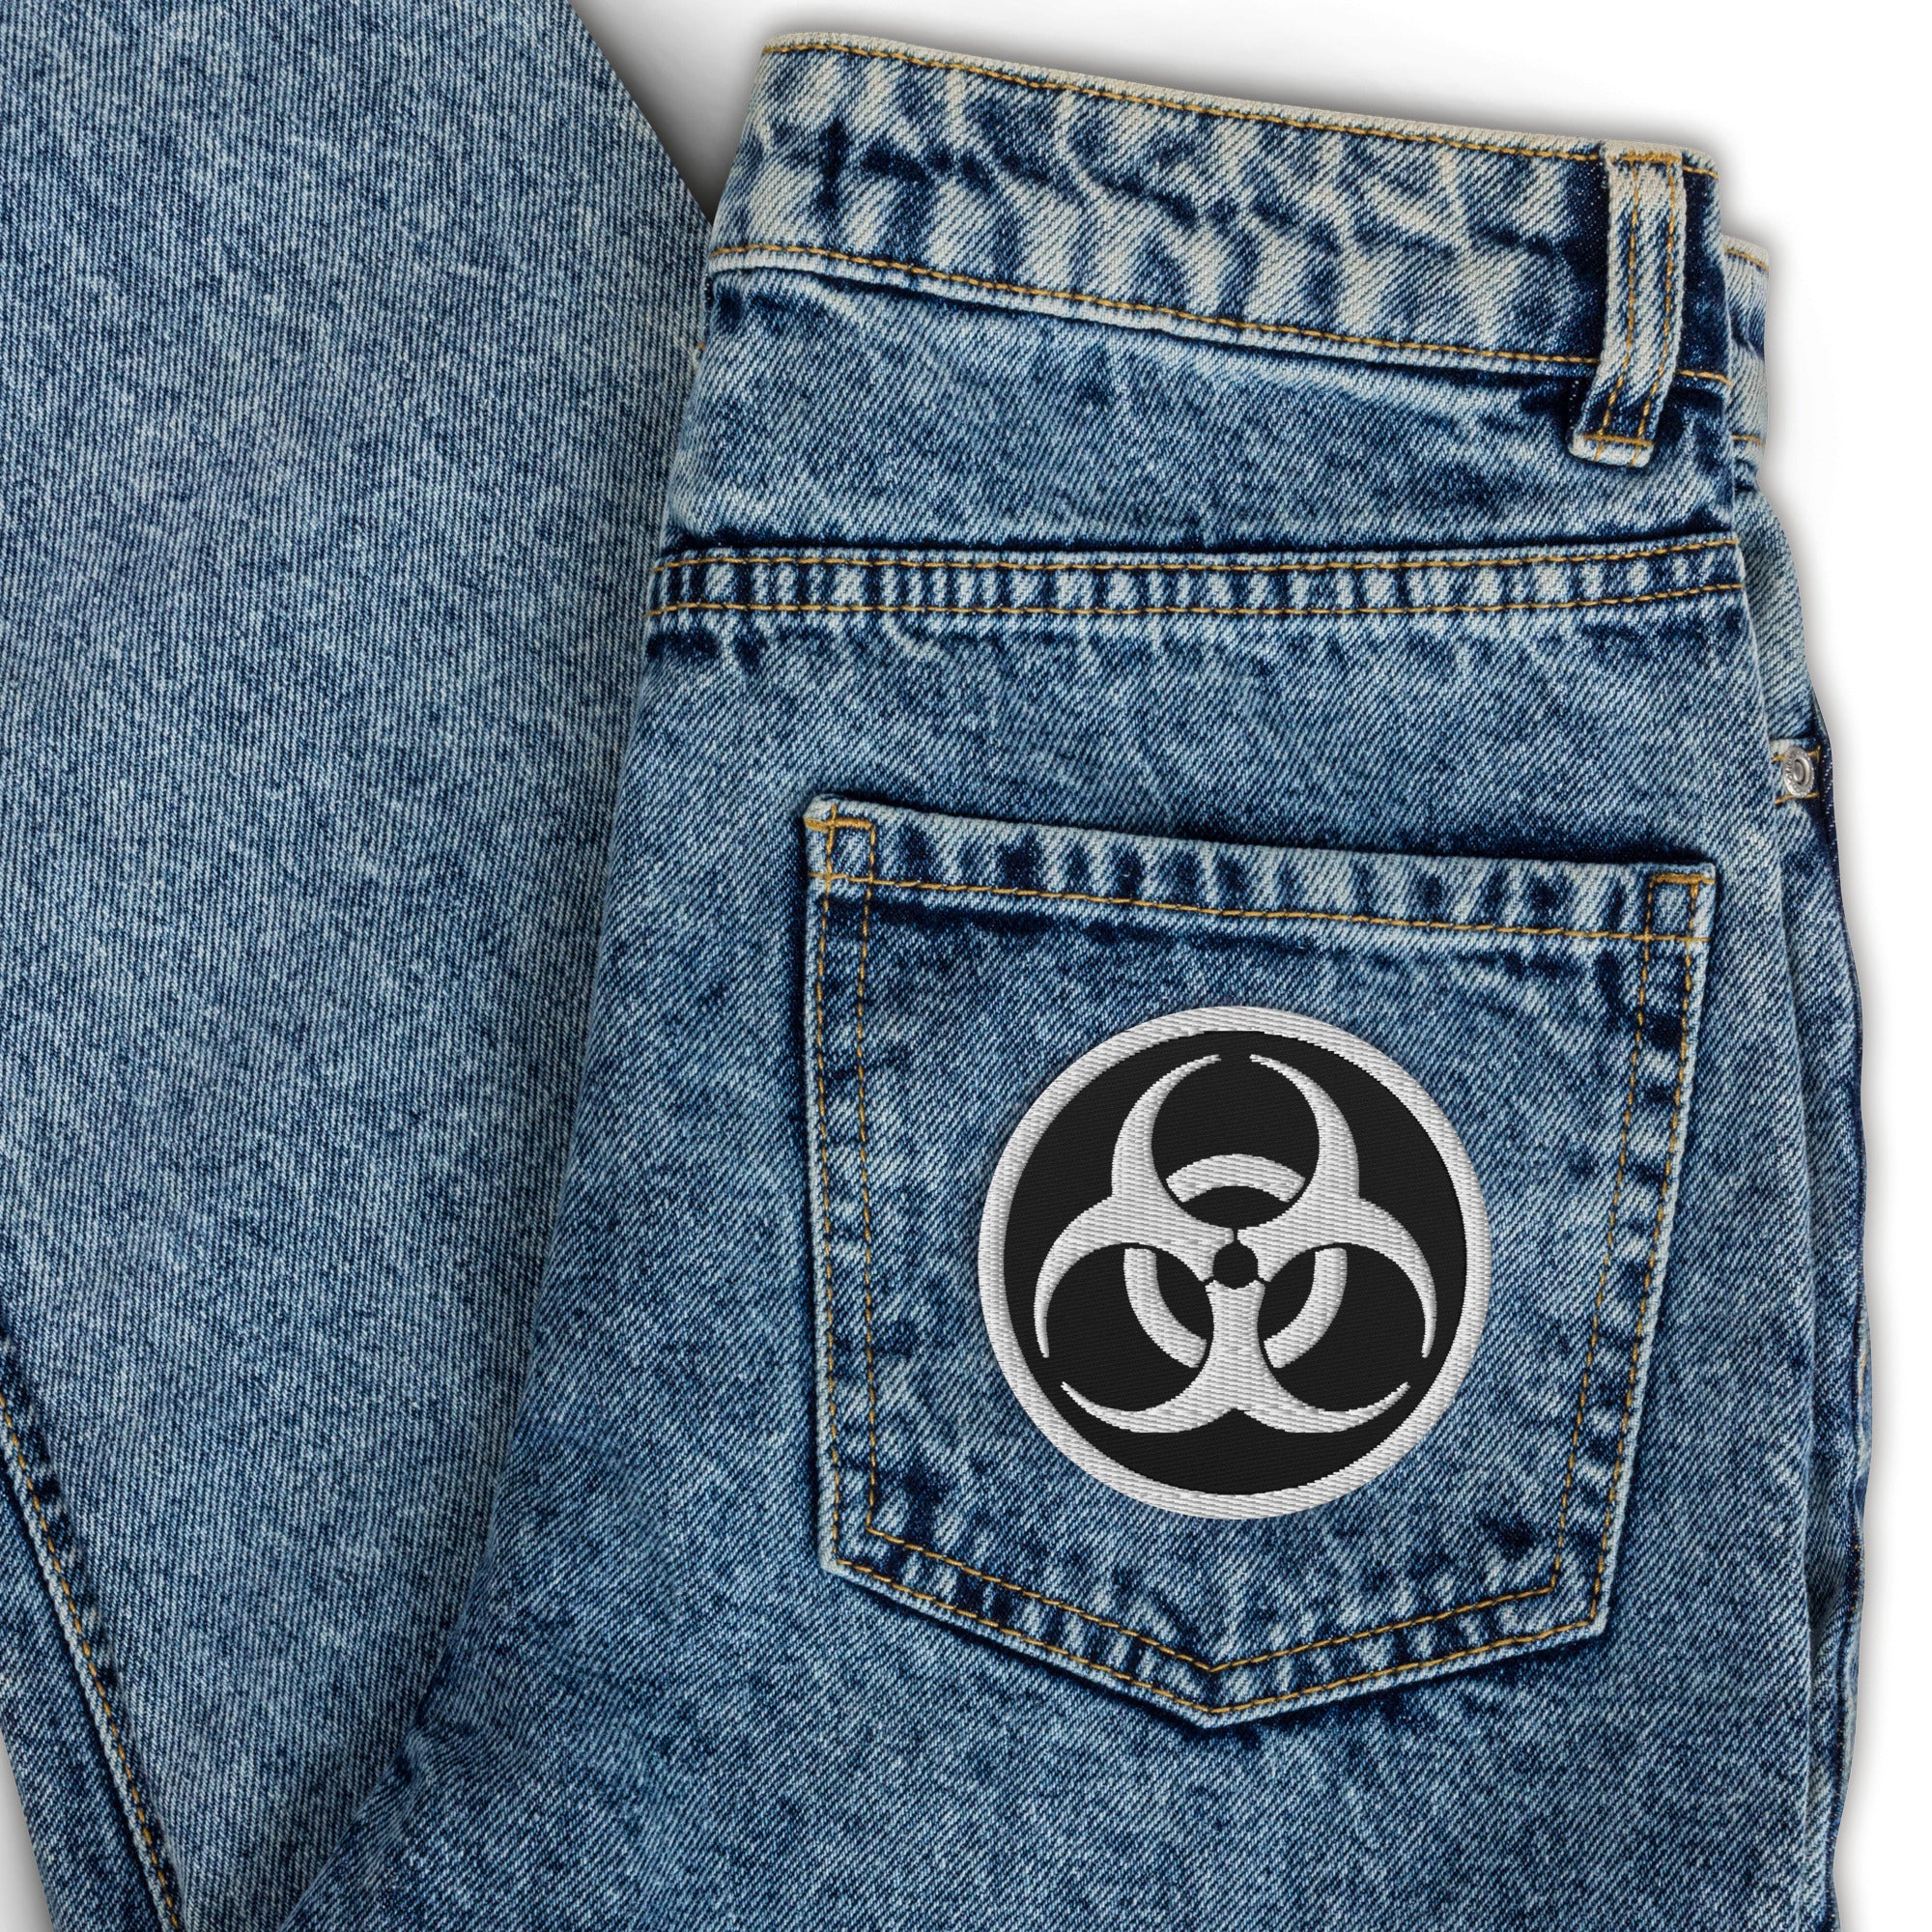 White Thread Bio Hazard Symbol Warning Sign Embroidered Patch Zombie Apocalypse - Edge of Life Designs